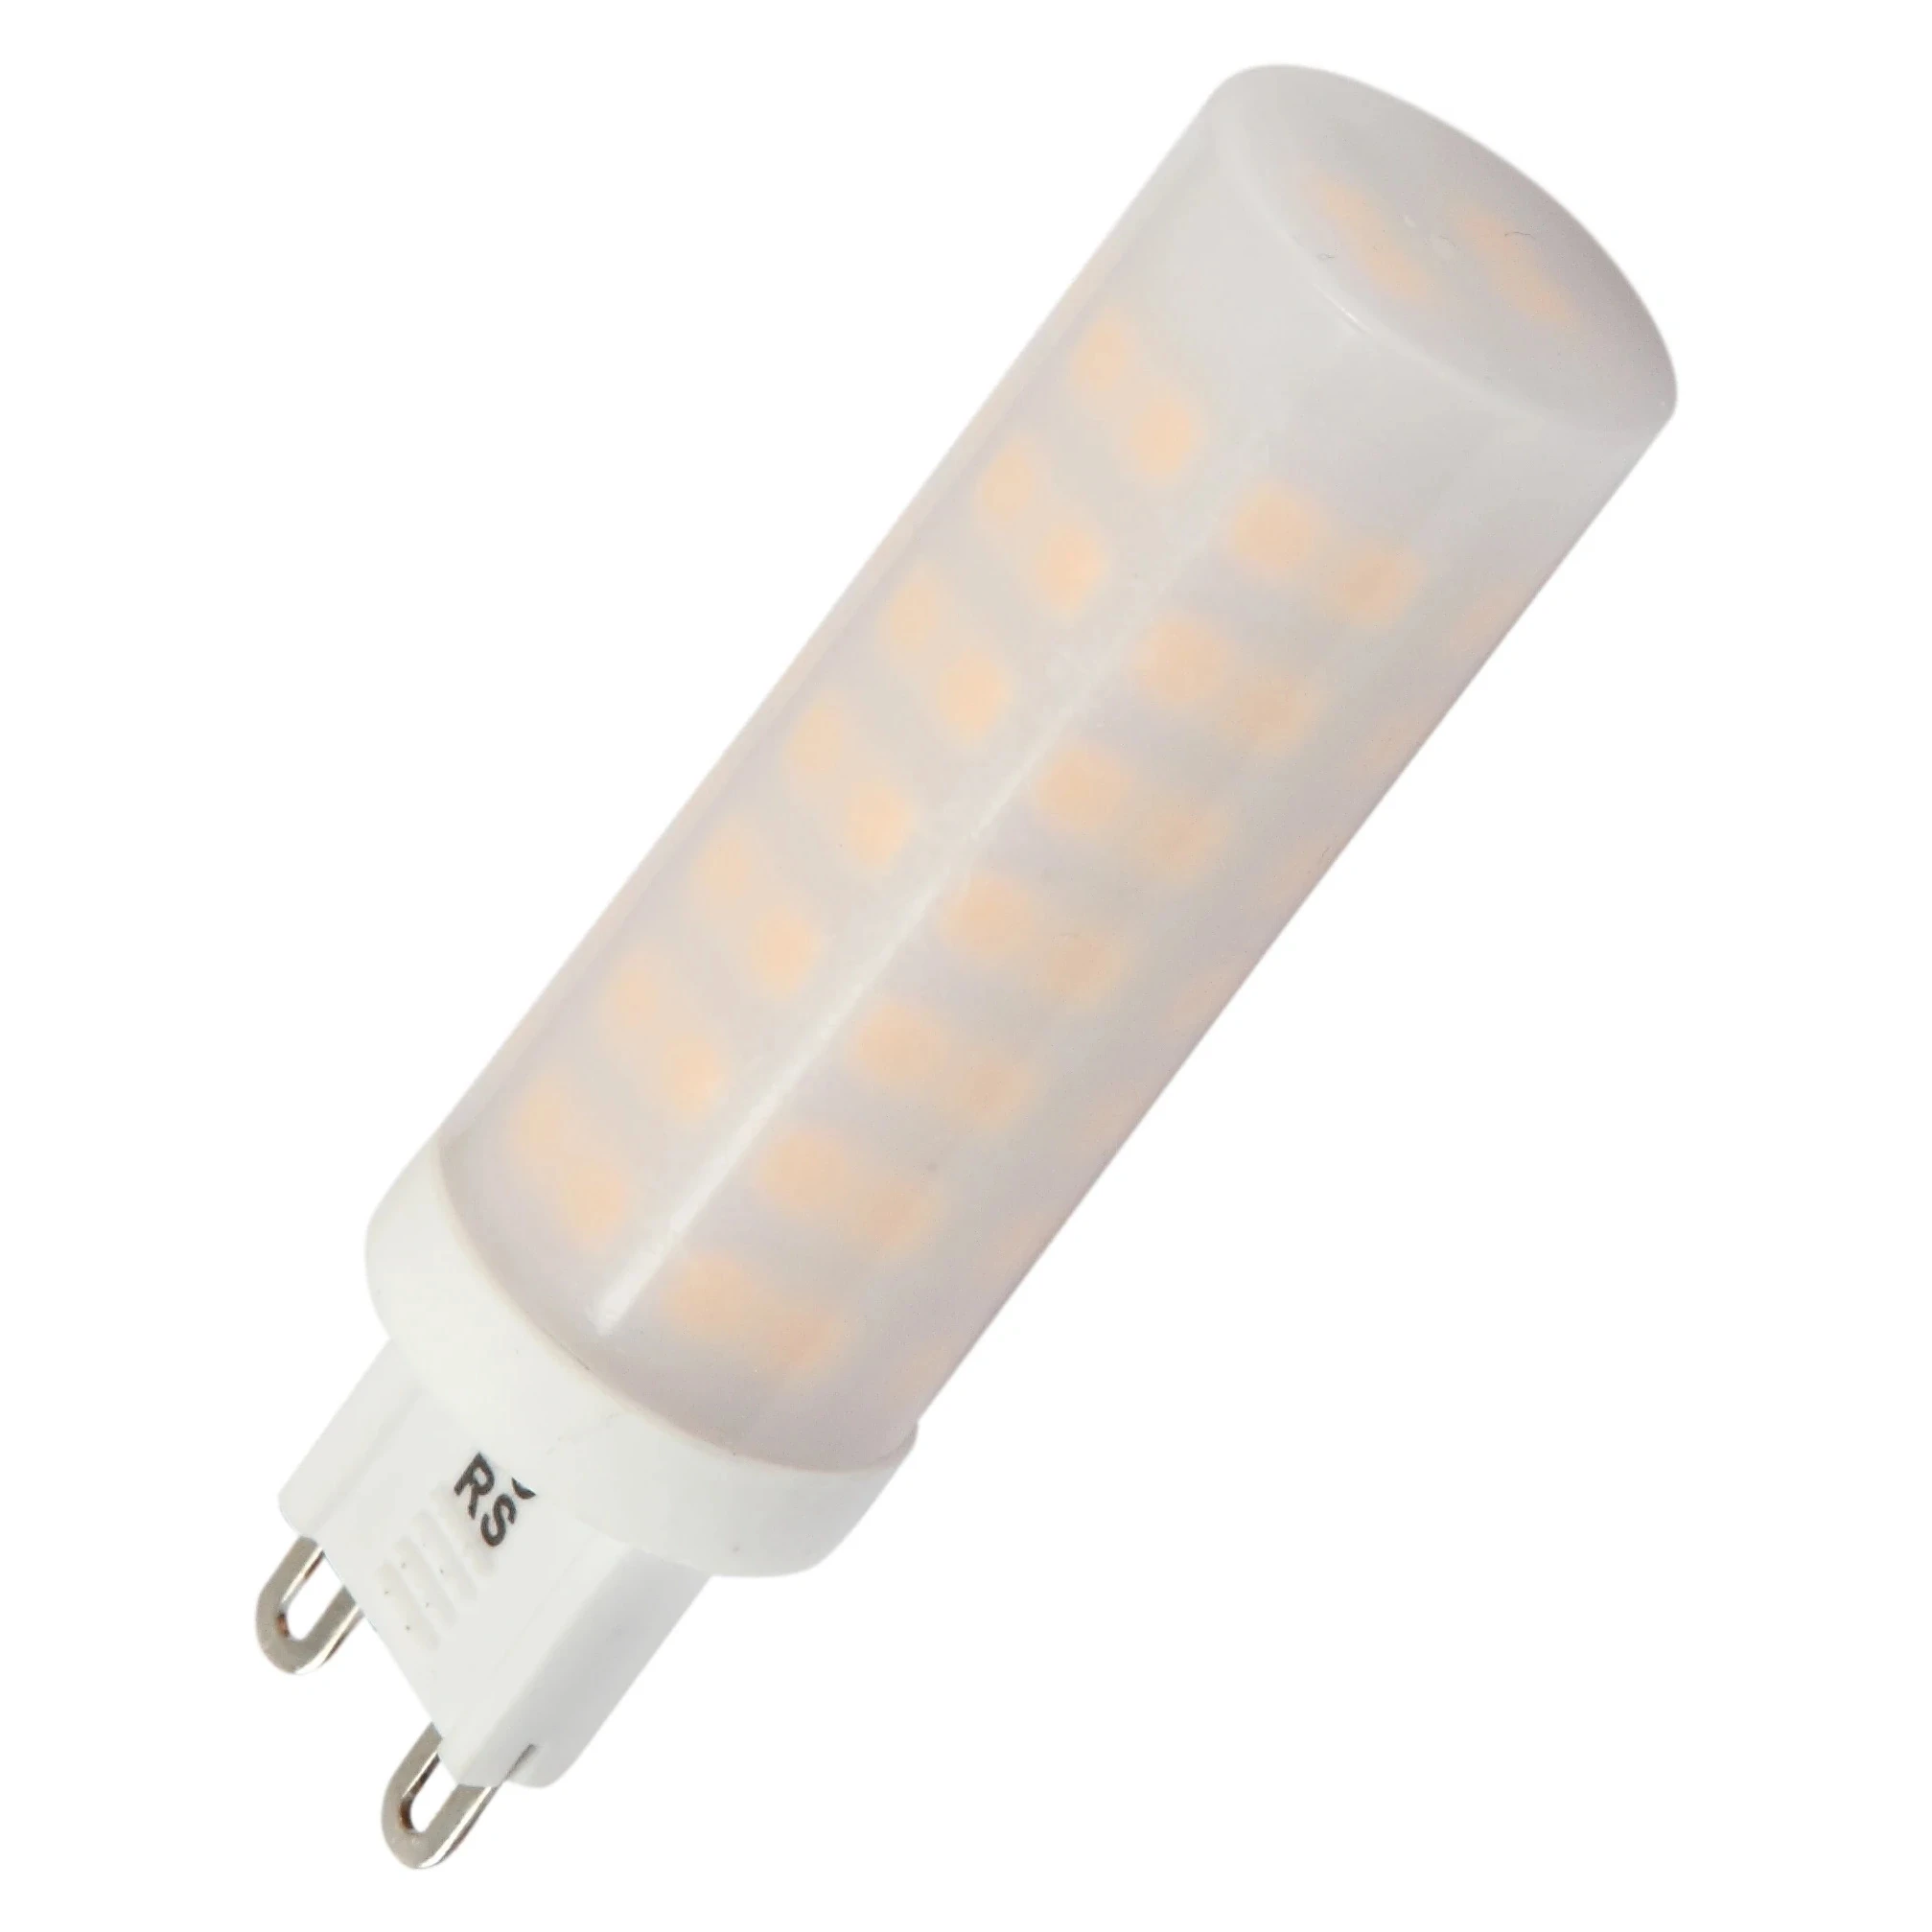 Bulb LED 7W (700lm) 3000K 3-step G9 - Colors - Buy online